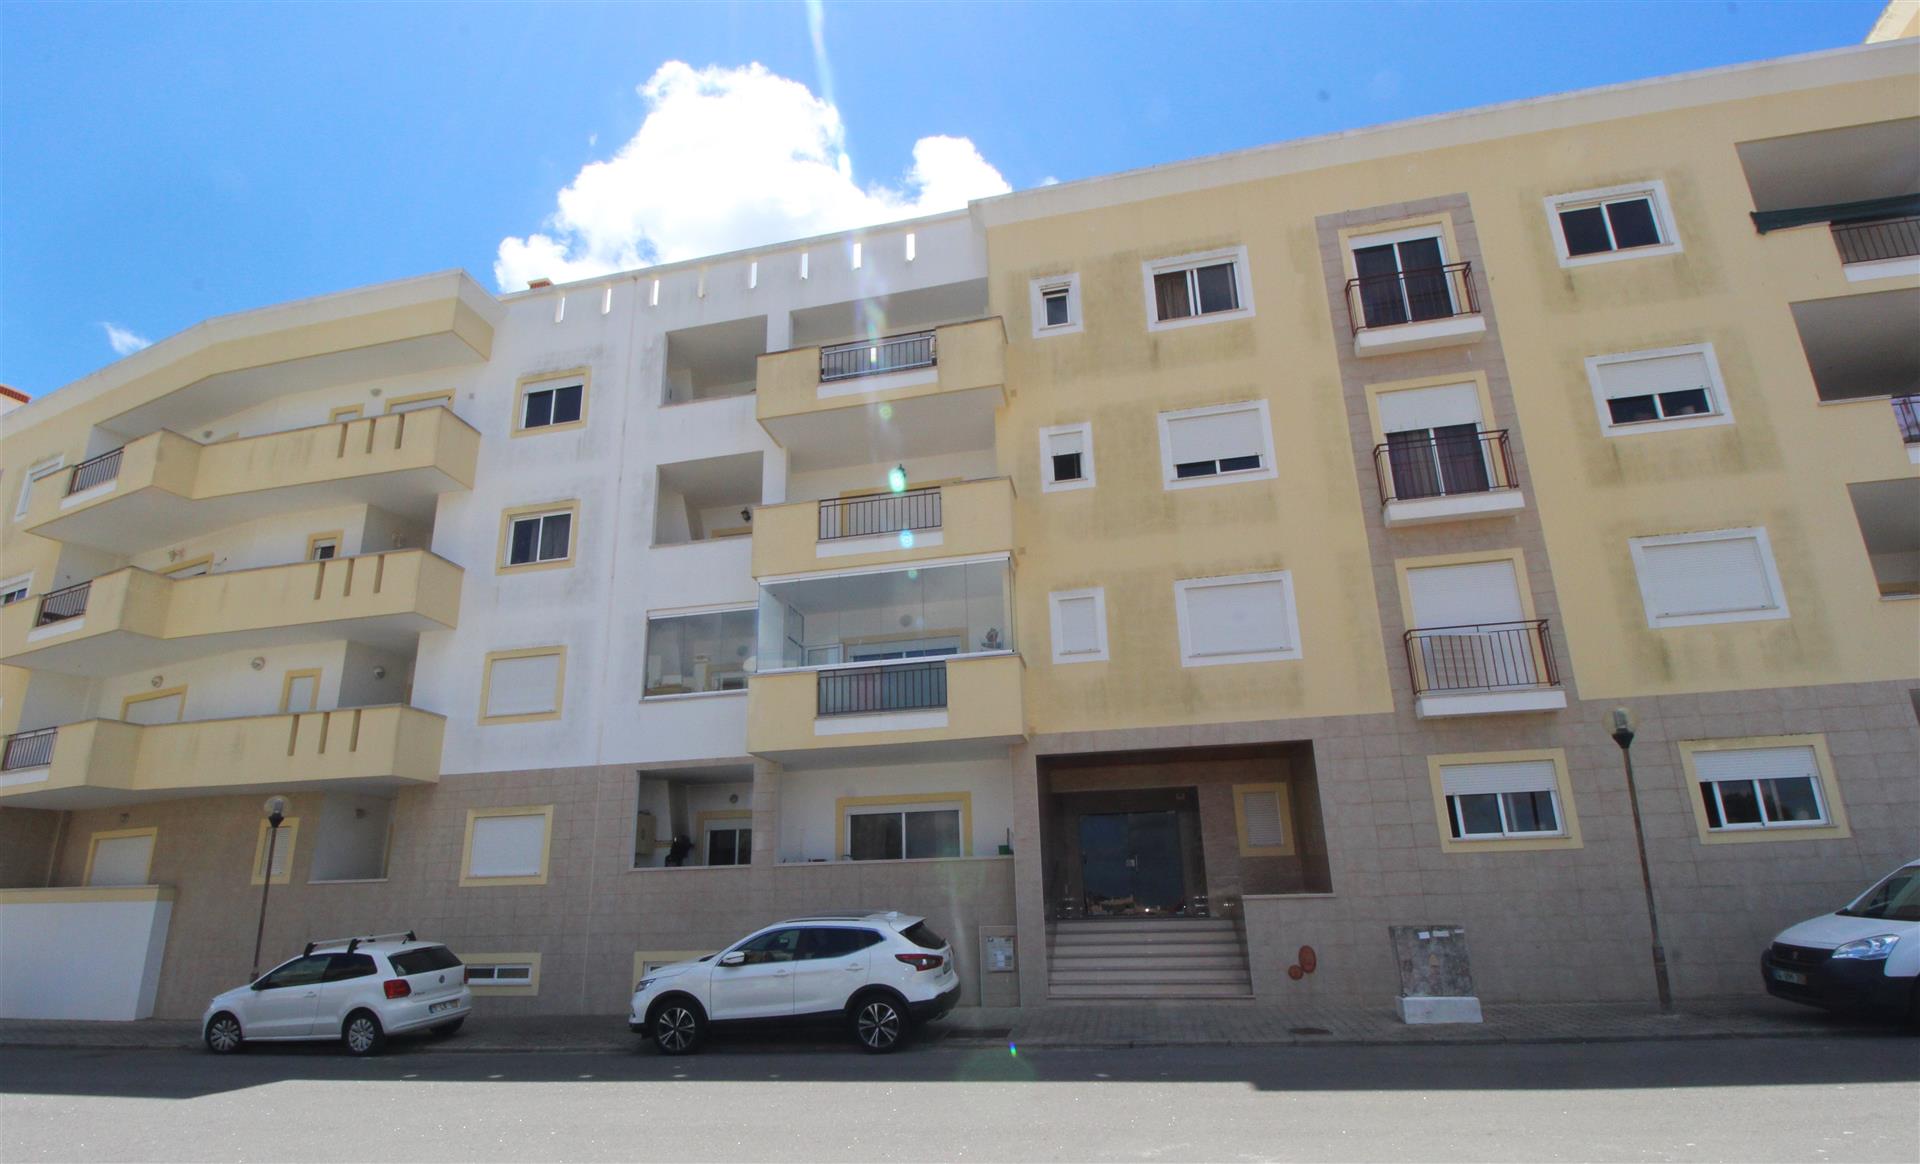 1 Bedroom ground floor apartment in Porto de Mós, Lagos